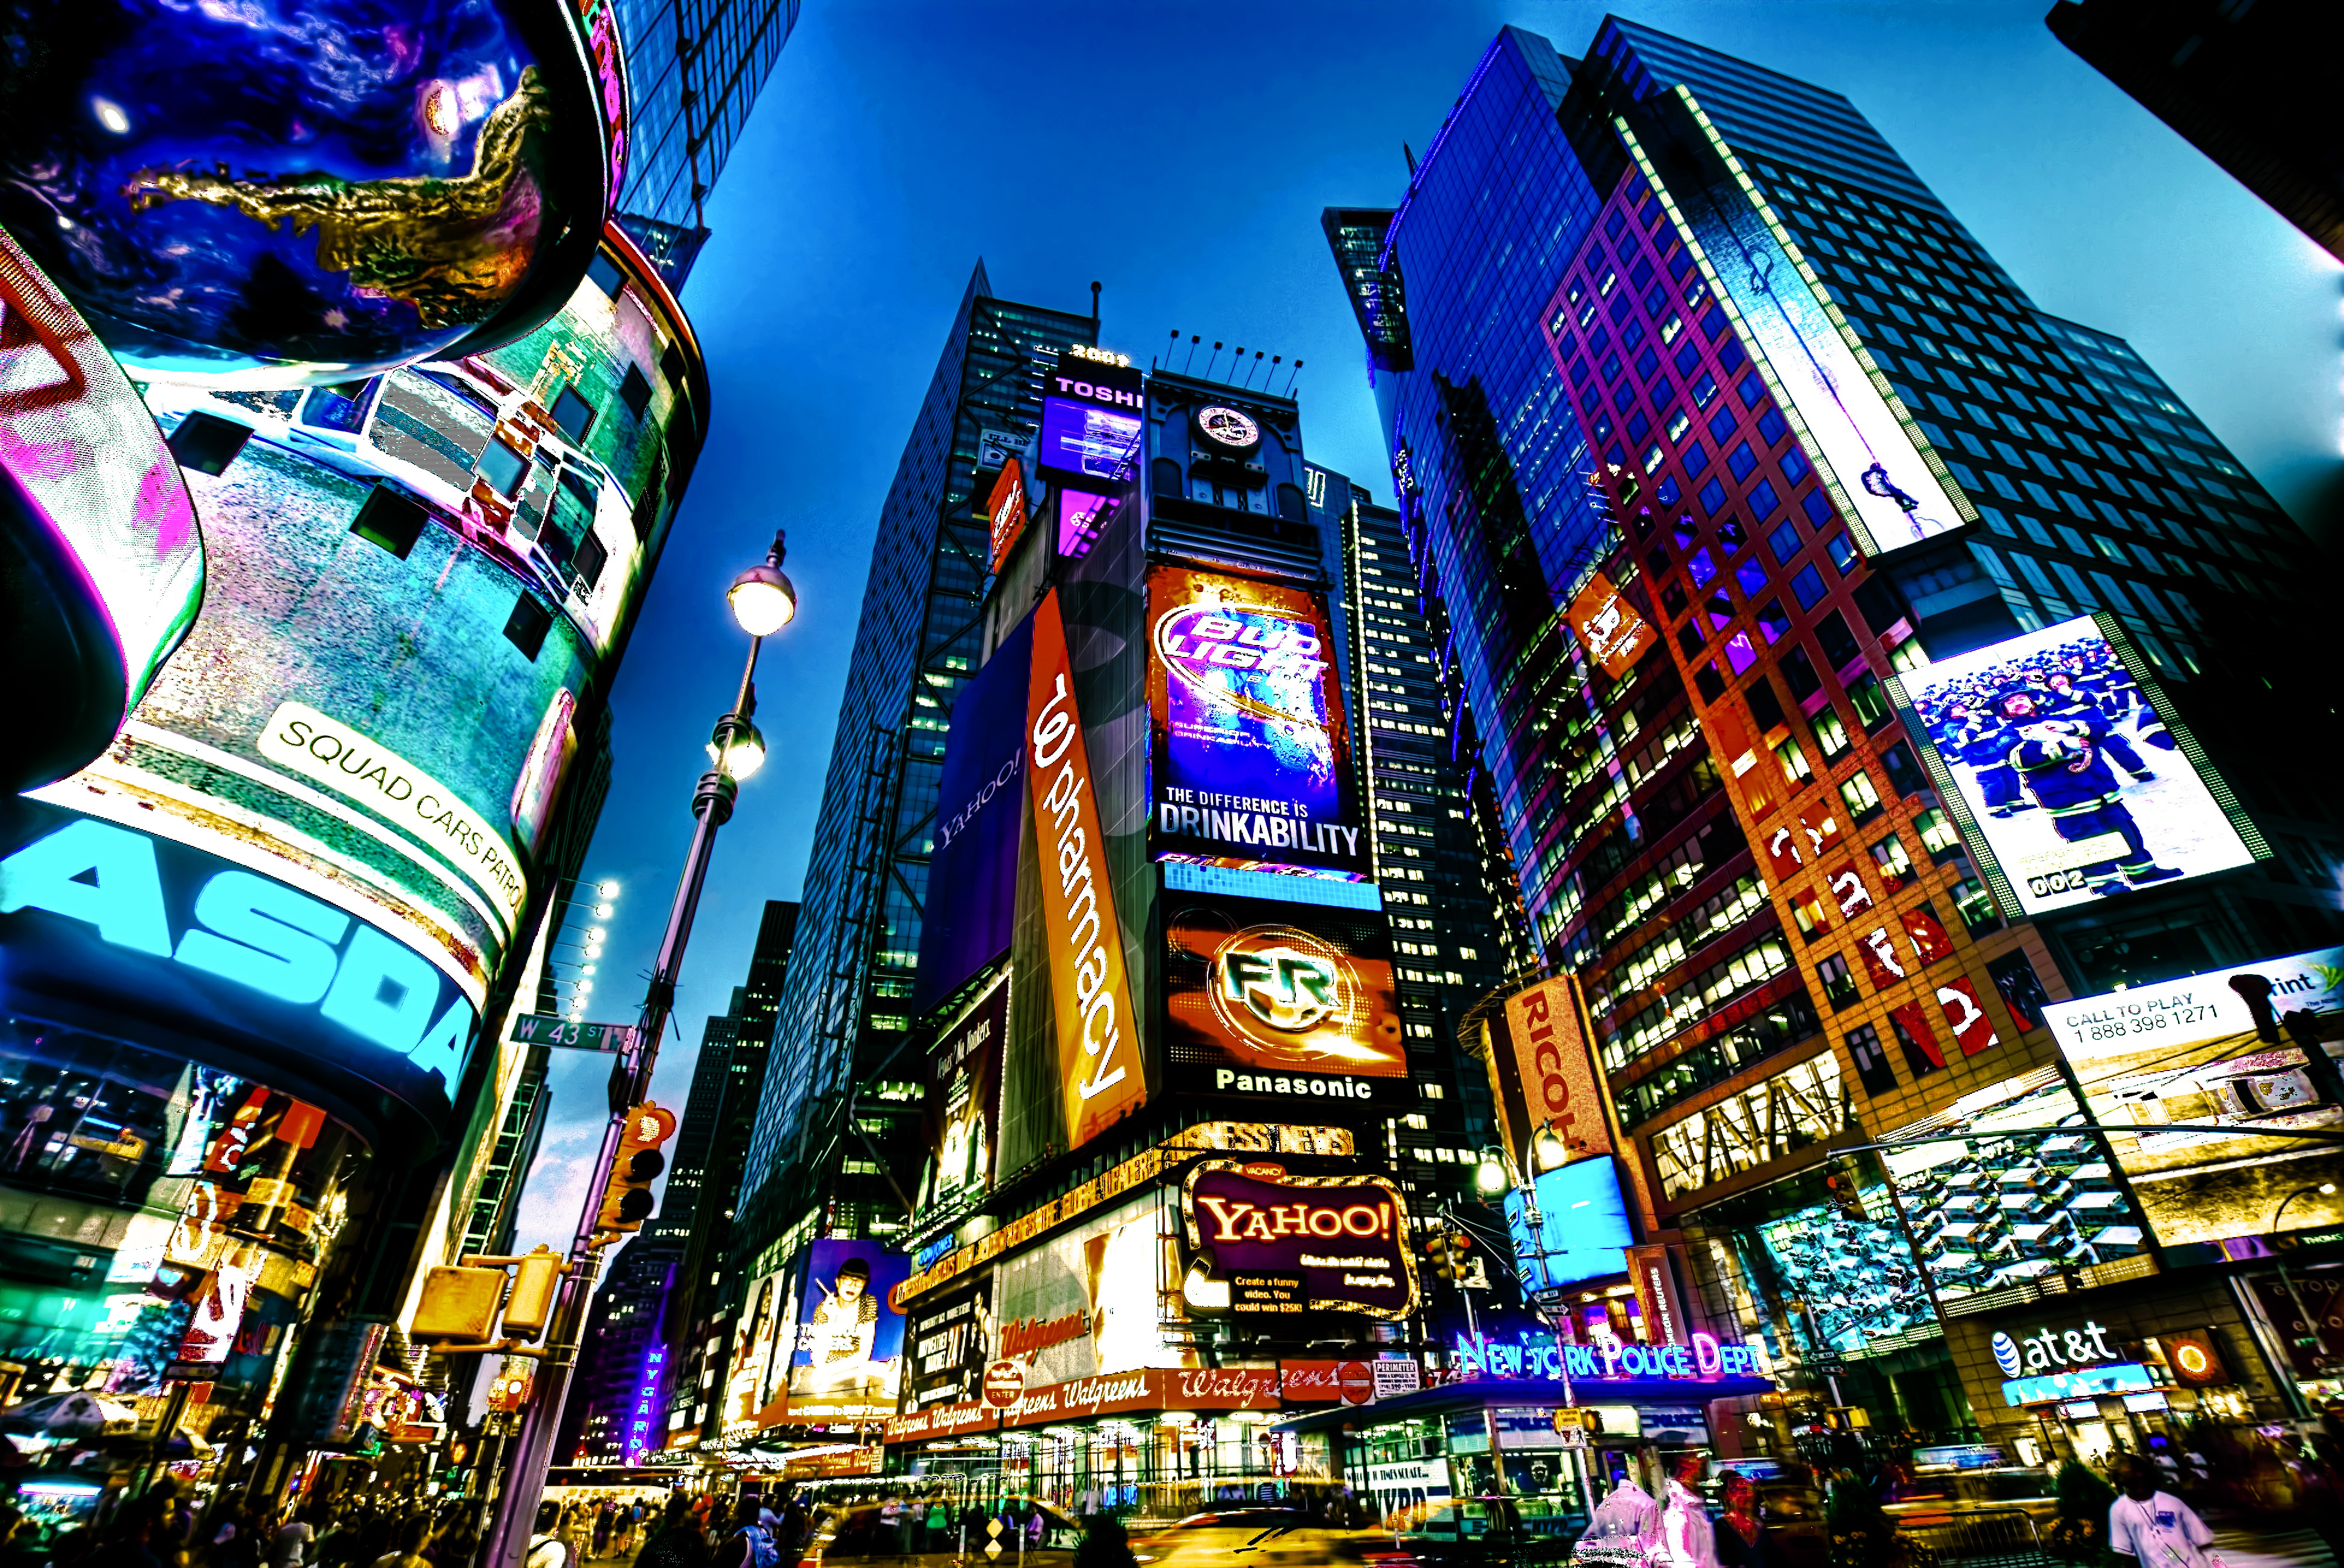 Times_Square,_New_York_City_%28HDR%29.jpg